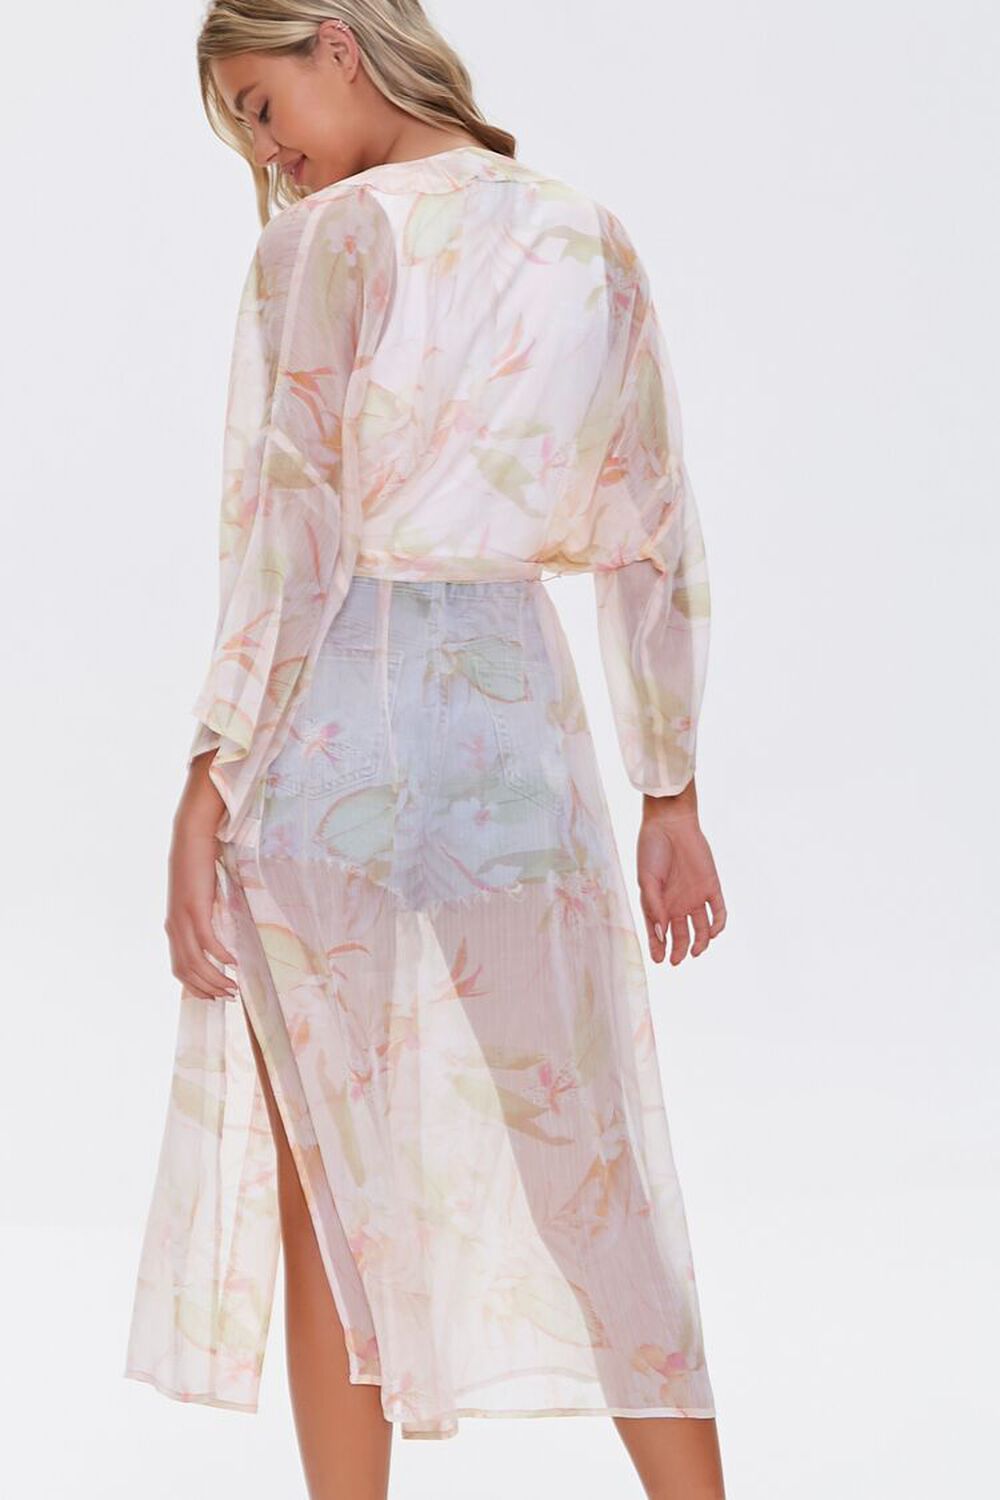 BLUSH/MULTI Tropical Floral Print Kimono, image 3